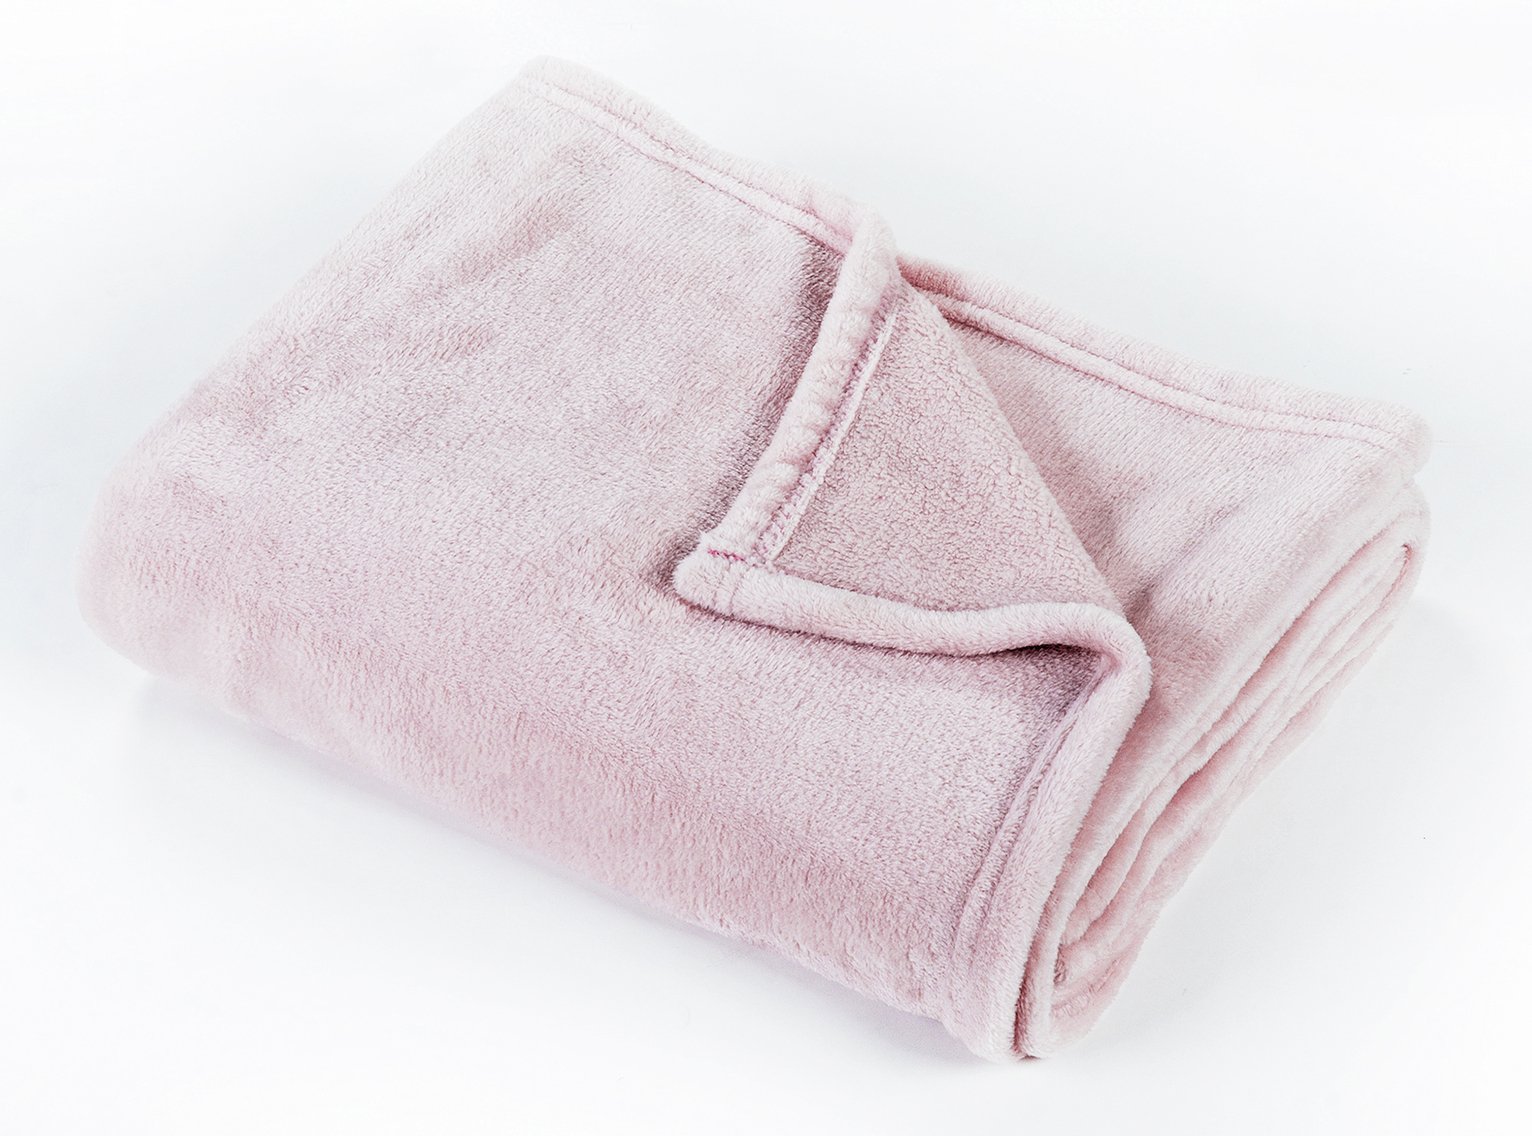 Argos Home Super Soft Fleece Throw - 125x150cm - Blush Pink